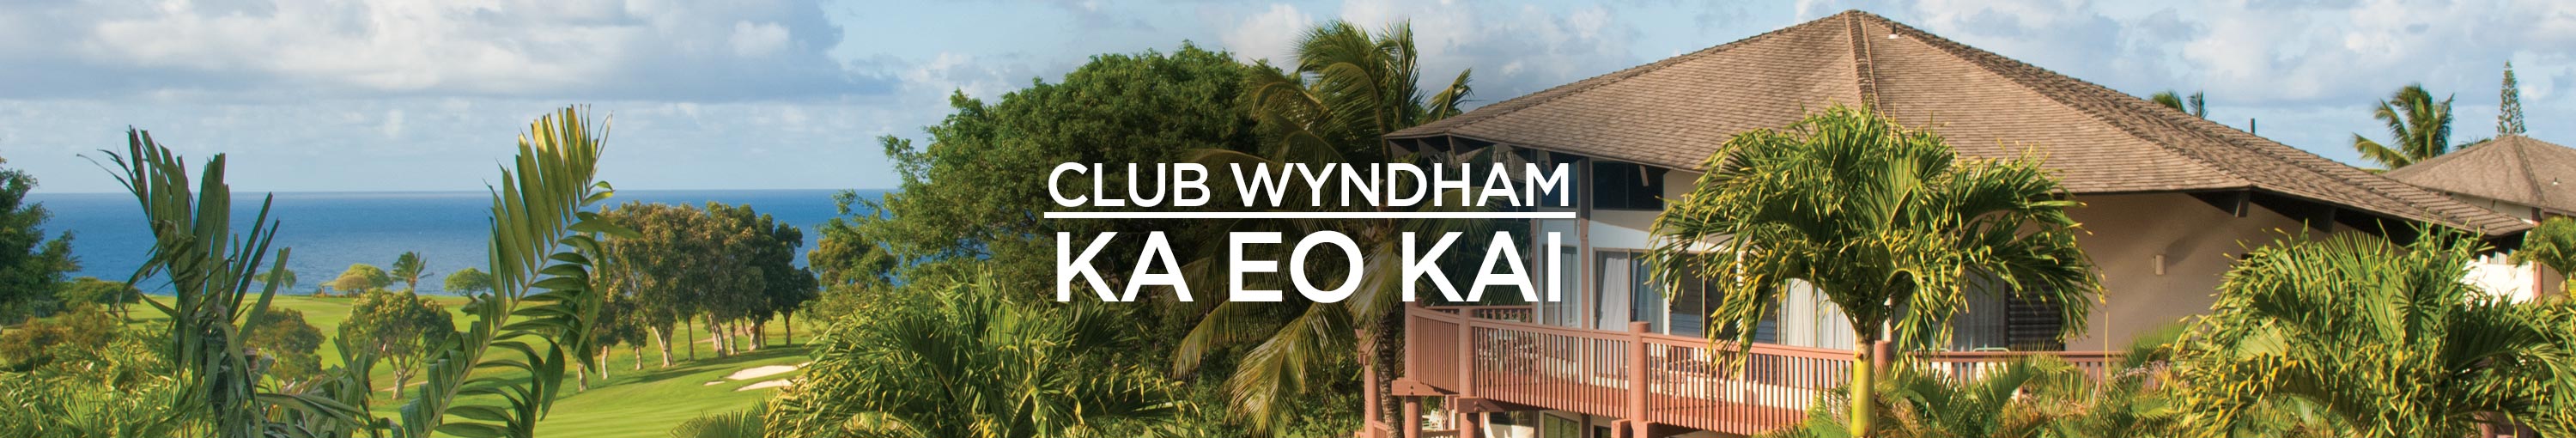 Club Wyndham Ka 'Eo Kai from Extra Holidays